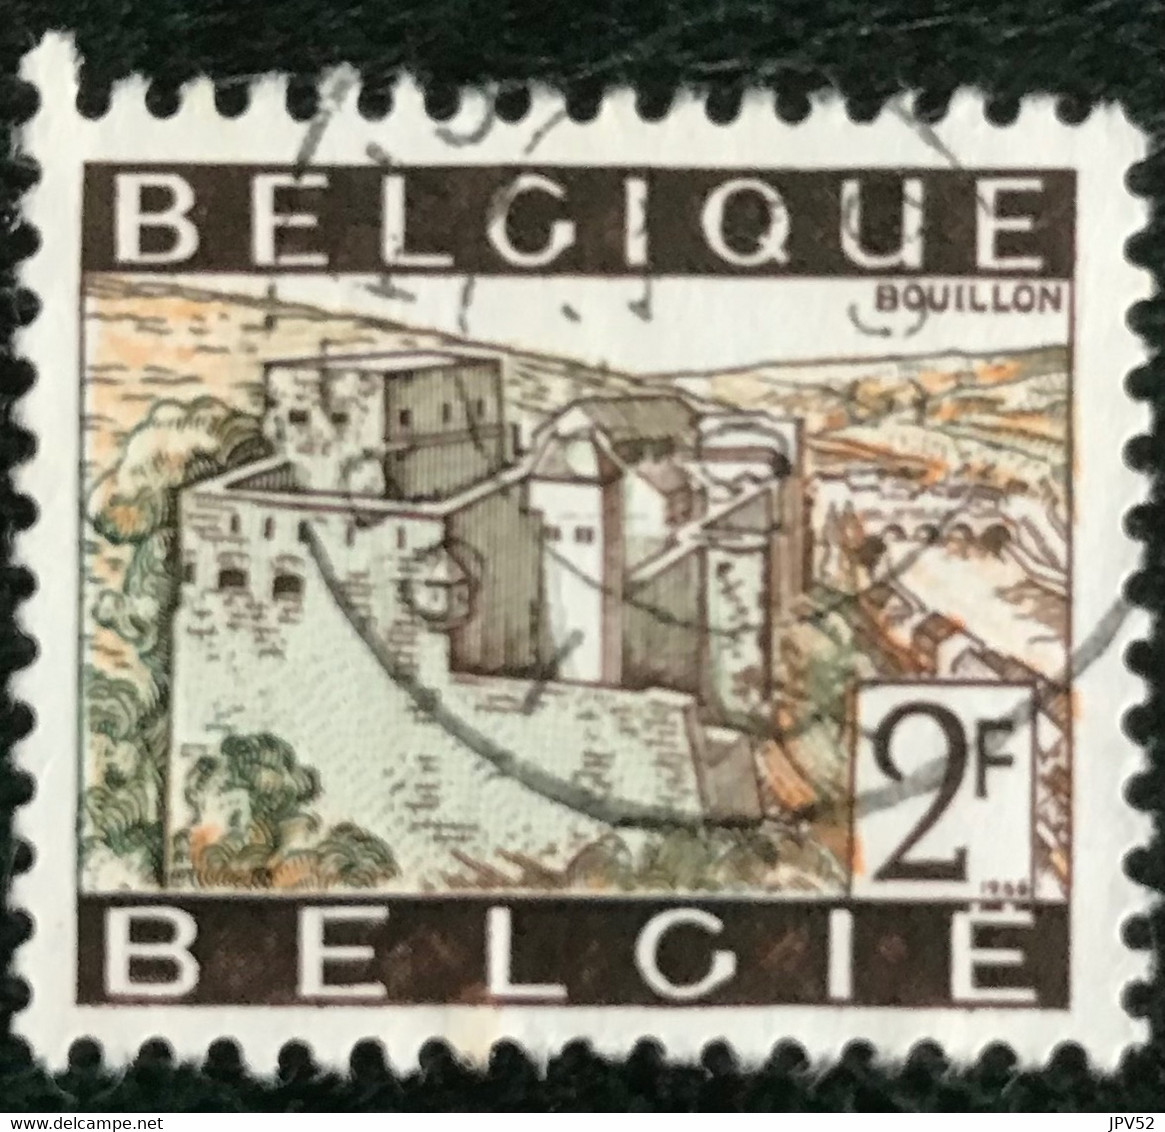 België - Belgique - C13/45 - (°)used - 1966 - Michel 1454 - Bouillon - Gebraucht